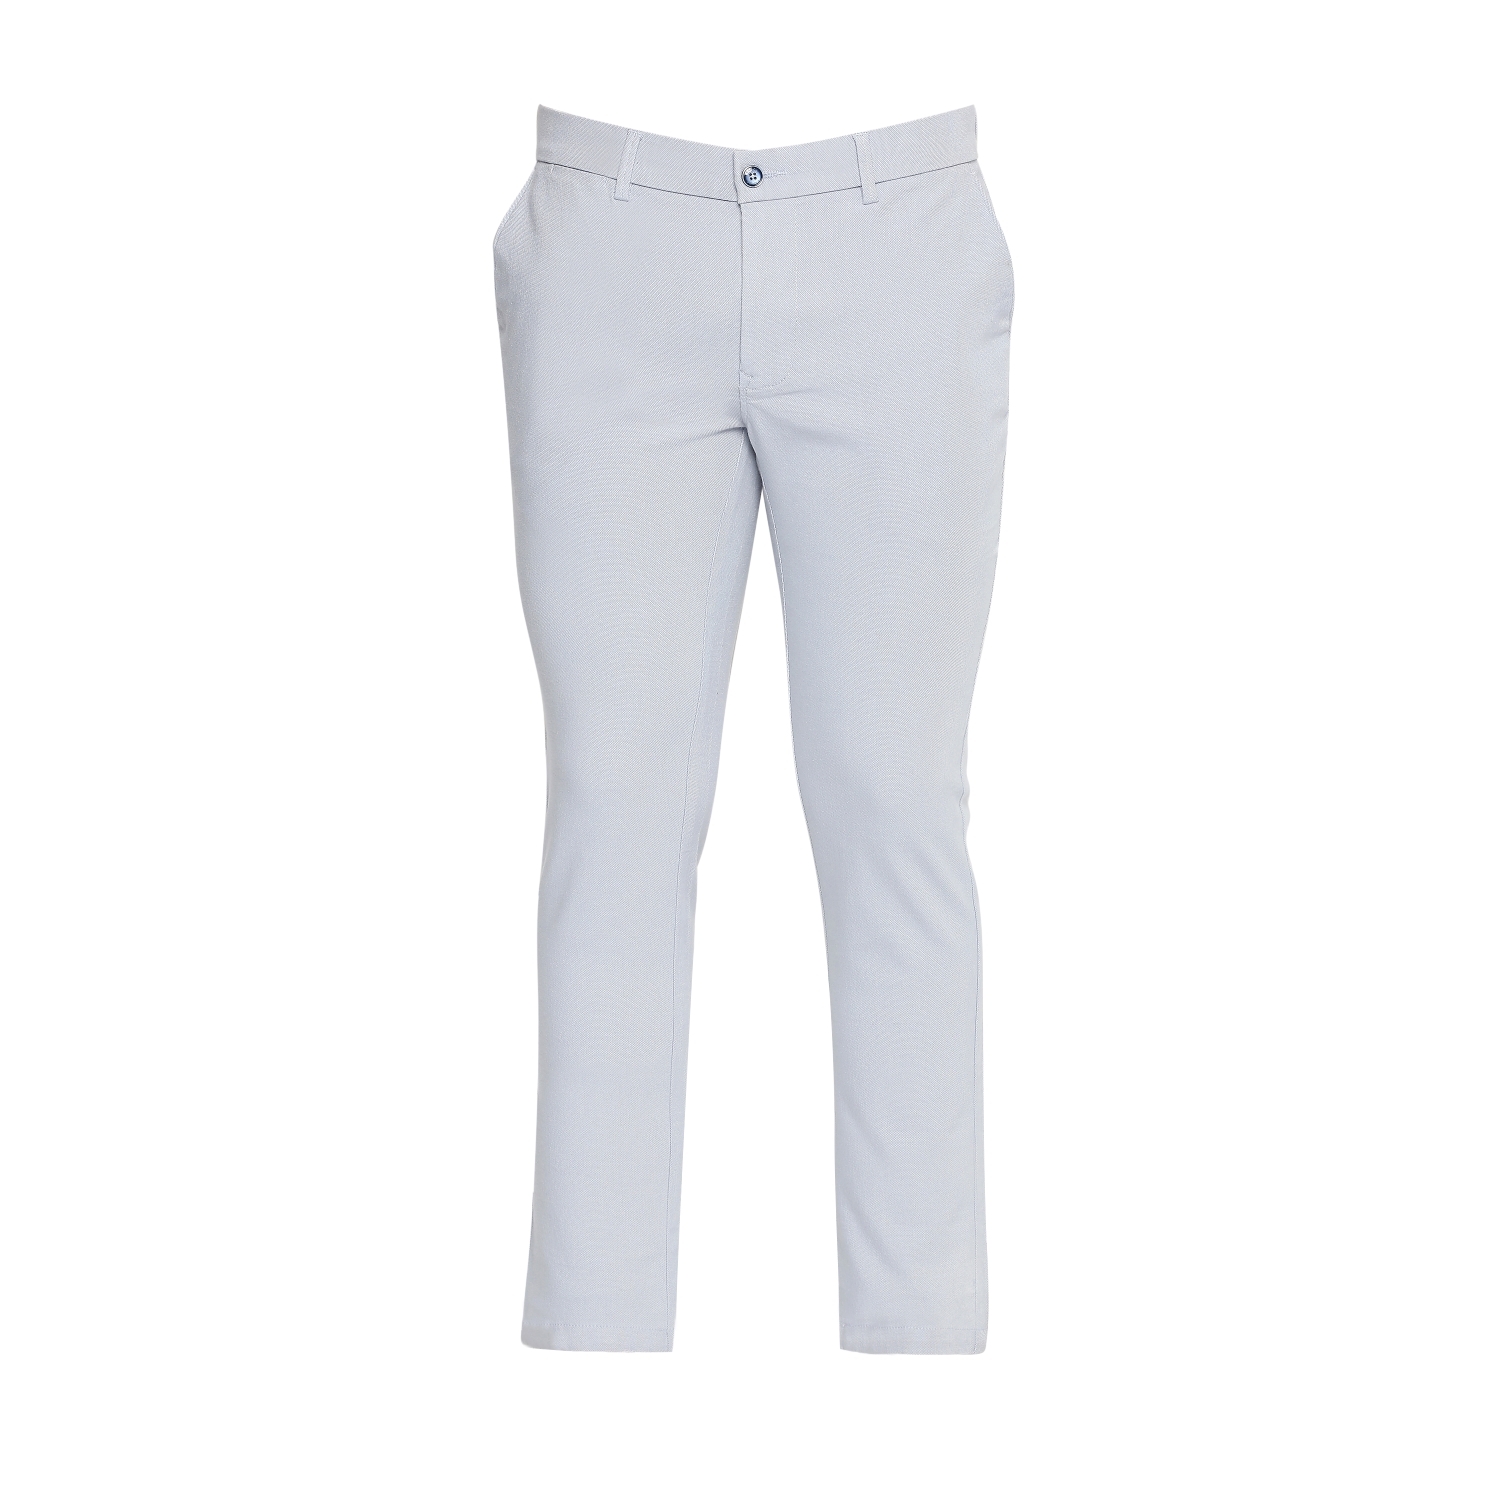 Basics | Men's Light Blue Cotton Blend Solid Trouser 5